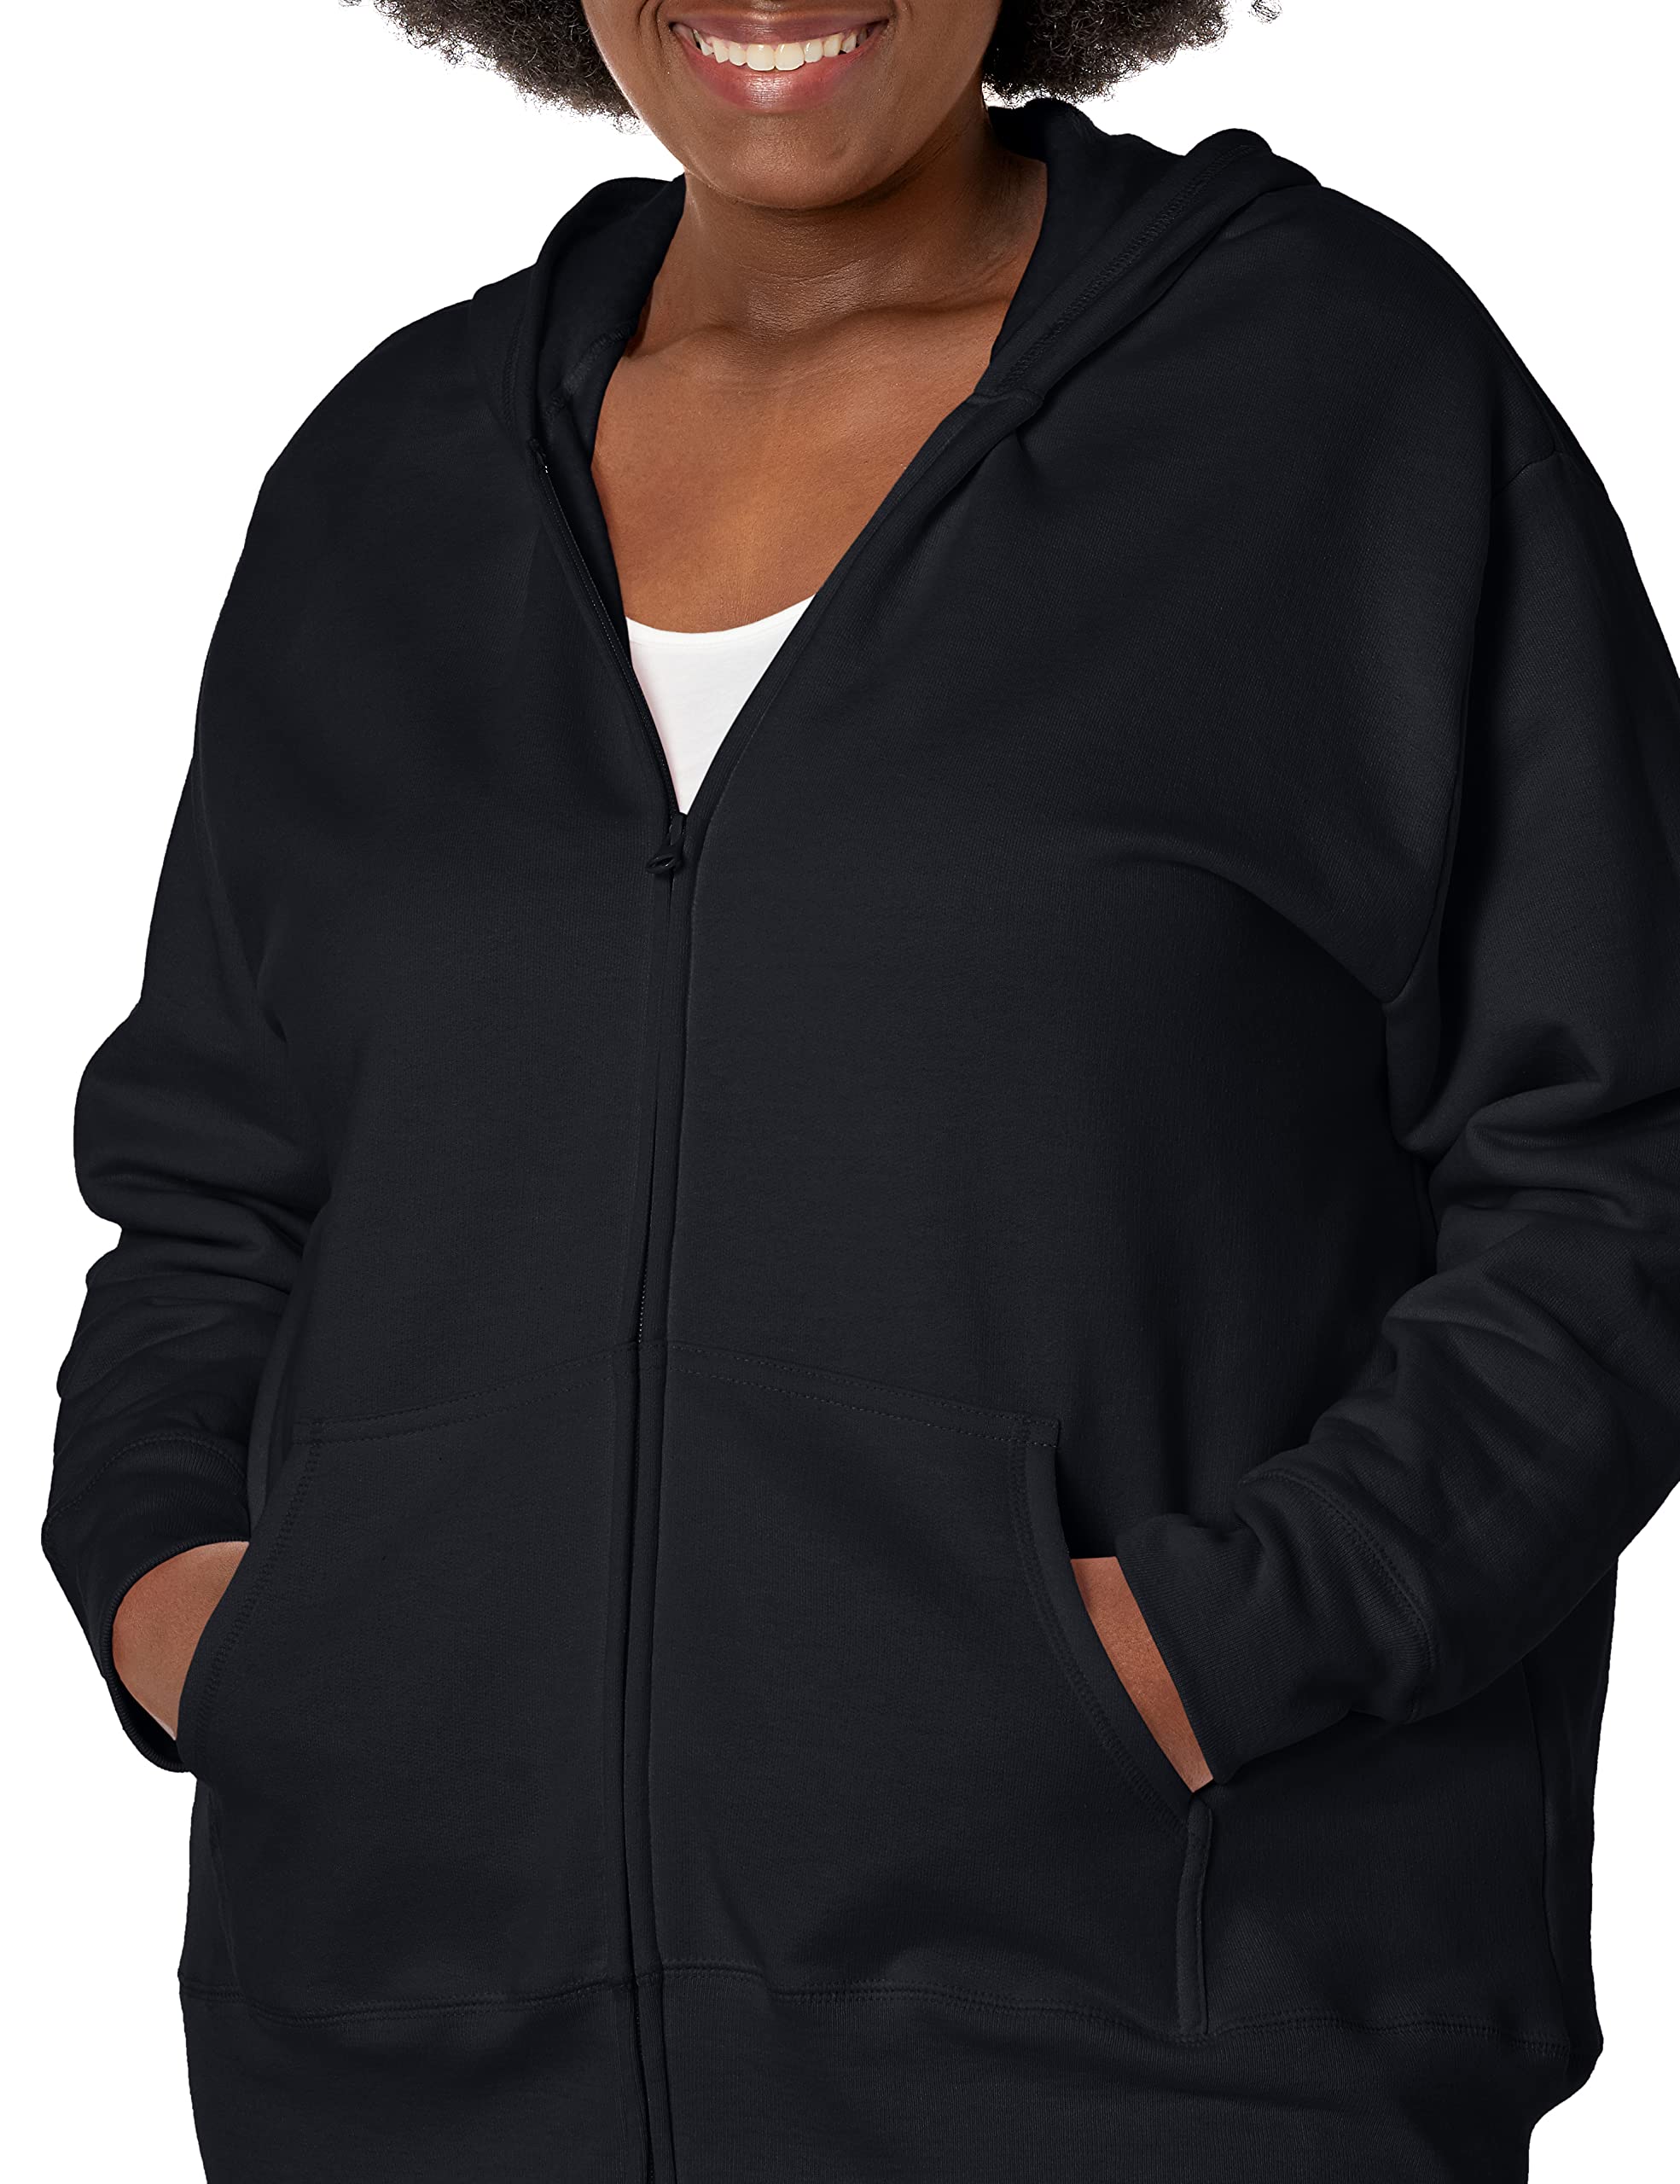 JUST MY SIZE Women's Plus Size Zip-up Fleece Hoodie, EcoSmart Midweight Hooded Sweatshirt